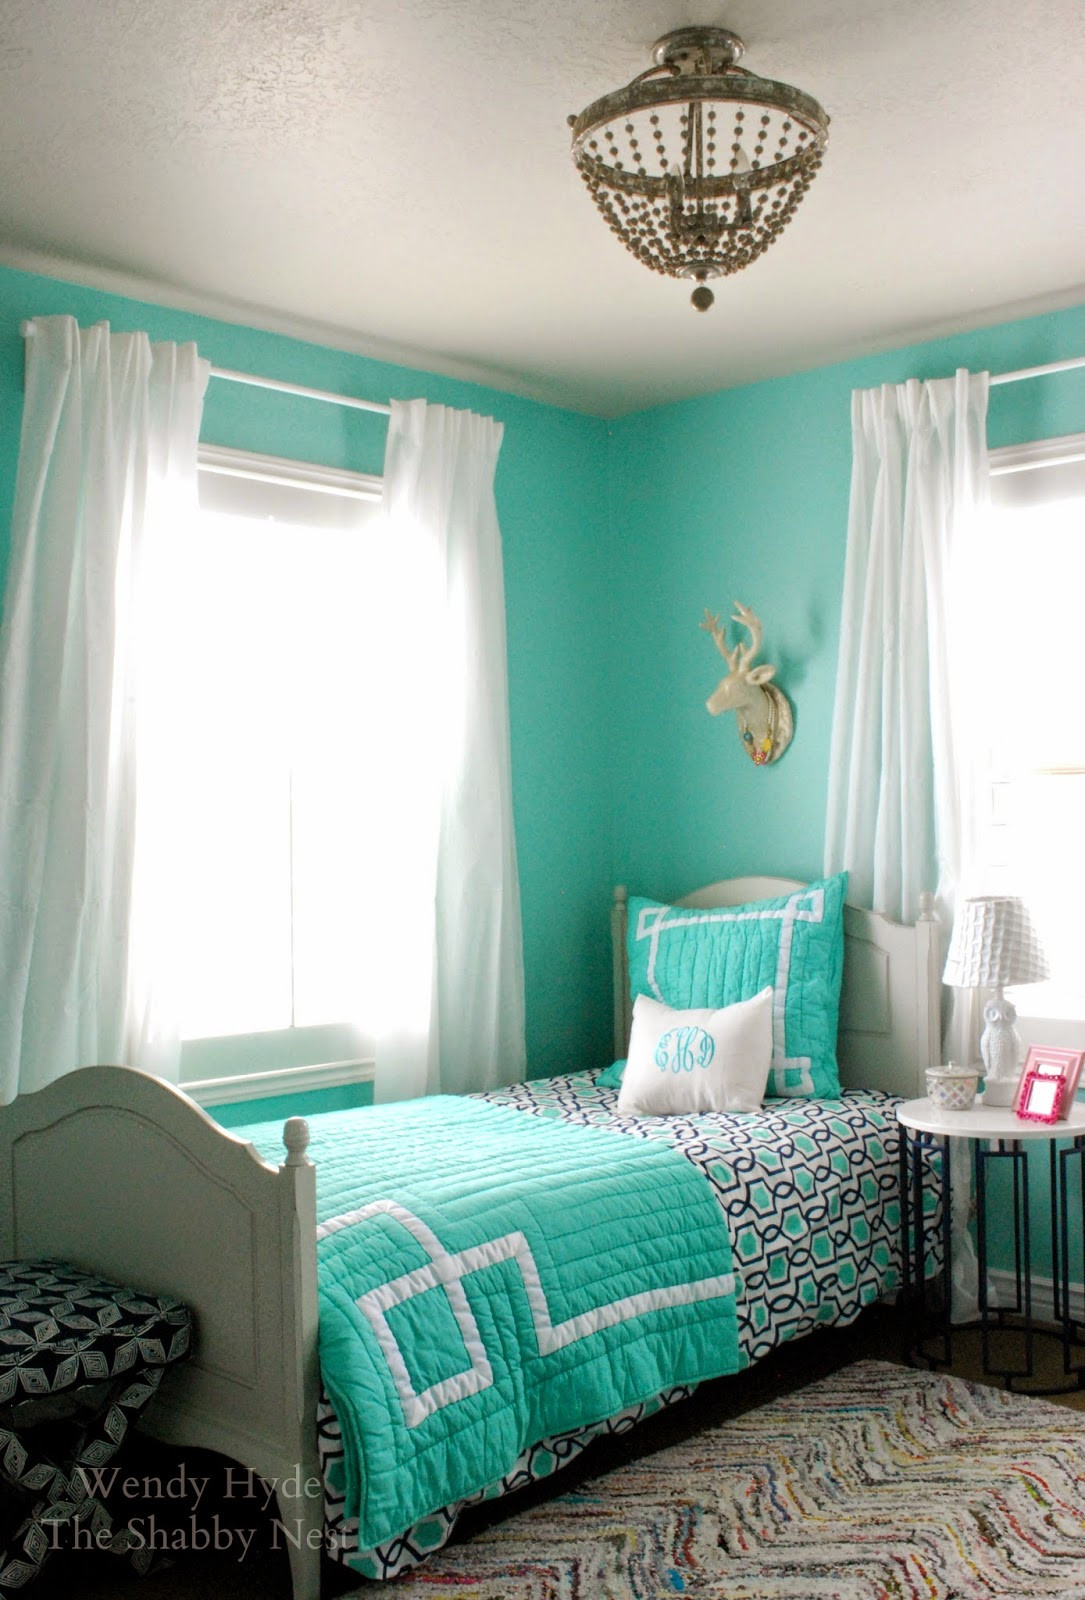 Teens Bedroom Colors
 The Shabby Nest e Room Challenge The Teen Girl s